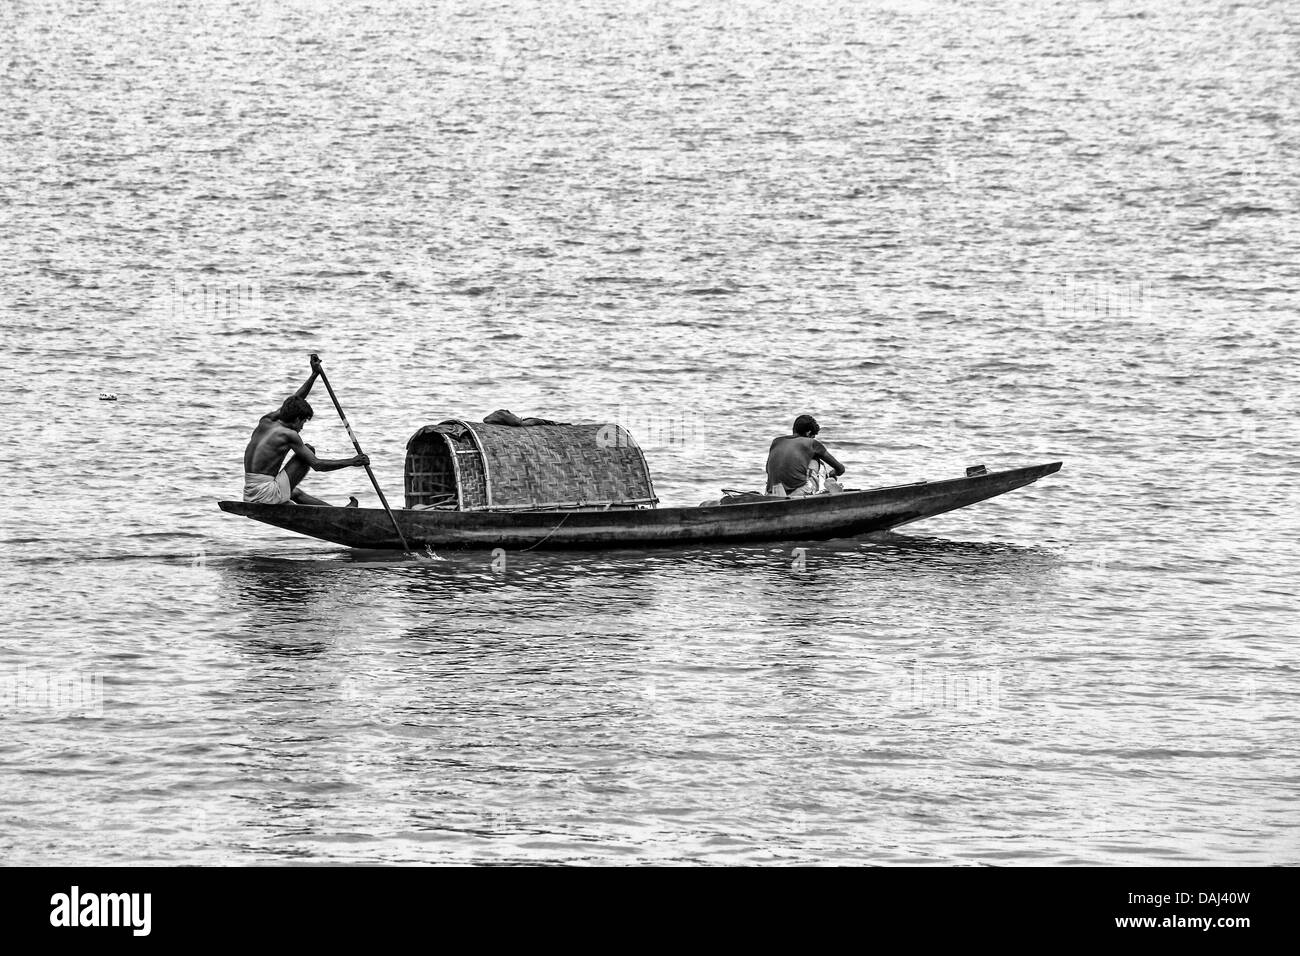 Men rowing a wooden boat along the River Hugli, Kolkata, West Bengal, India Stock Photo